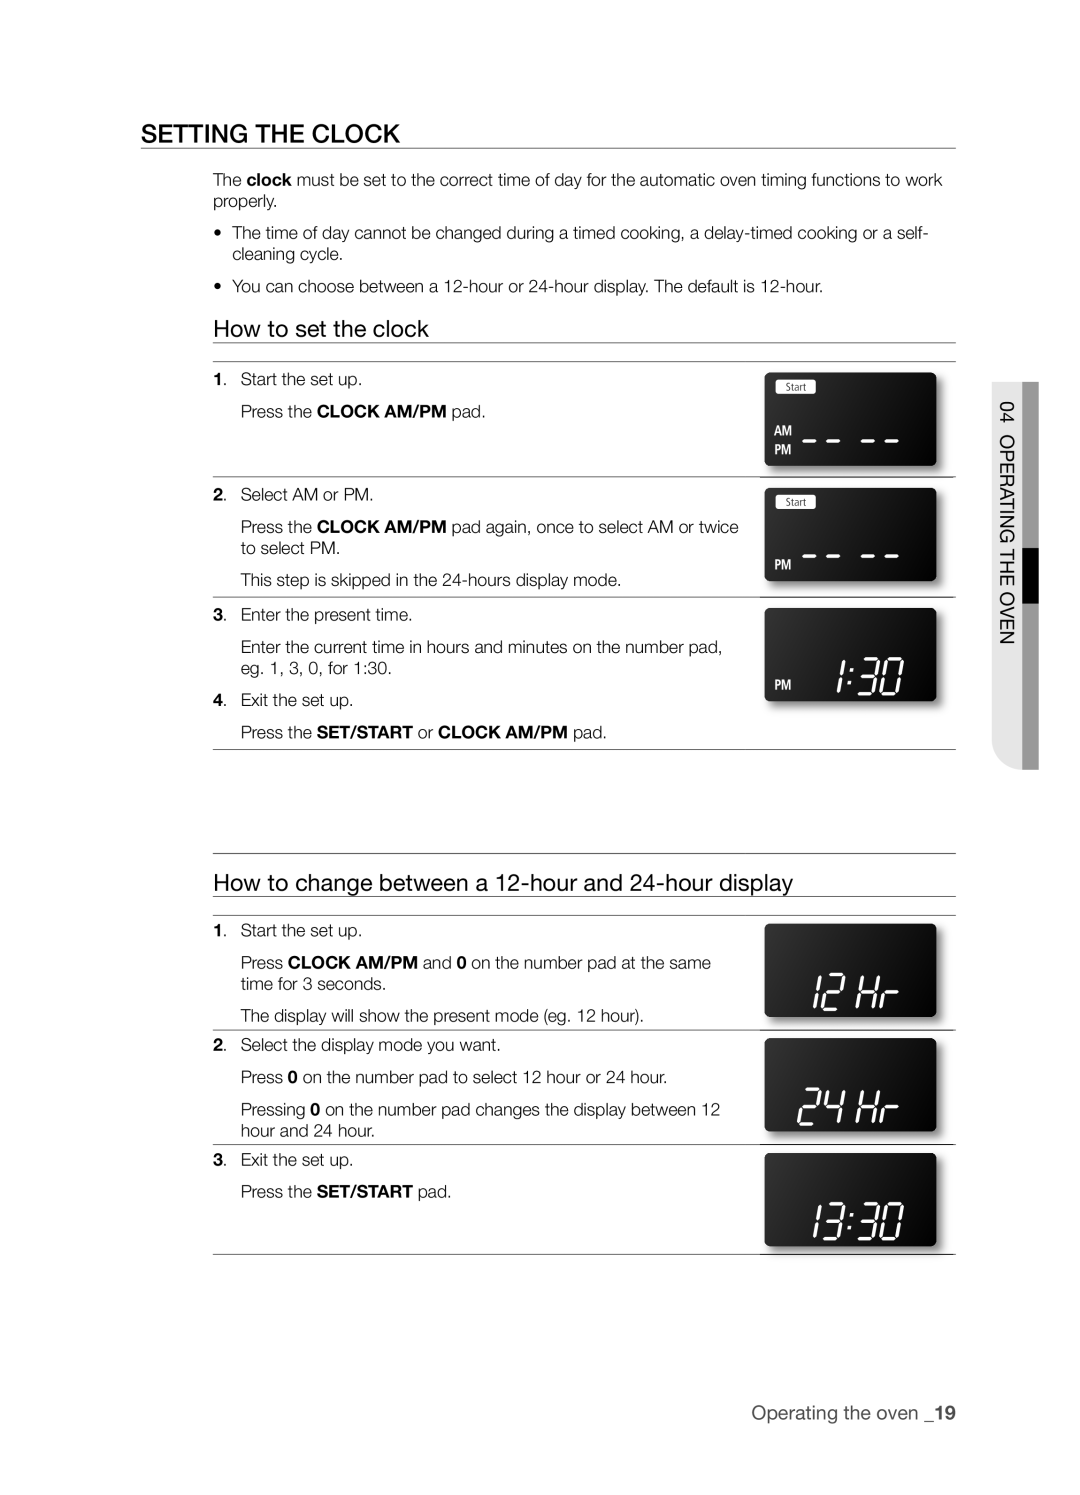 Samsung FTQ352IWUW, FTQ352IWUB Setting The Clock, How to set the clock, How to change between a 12-hourand 24-hourdisplay 